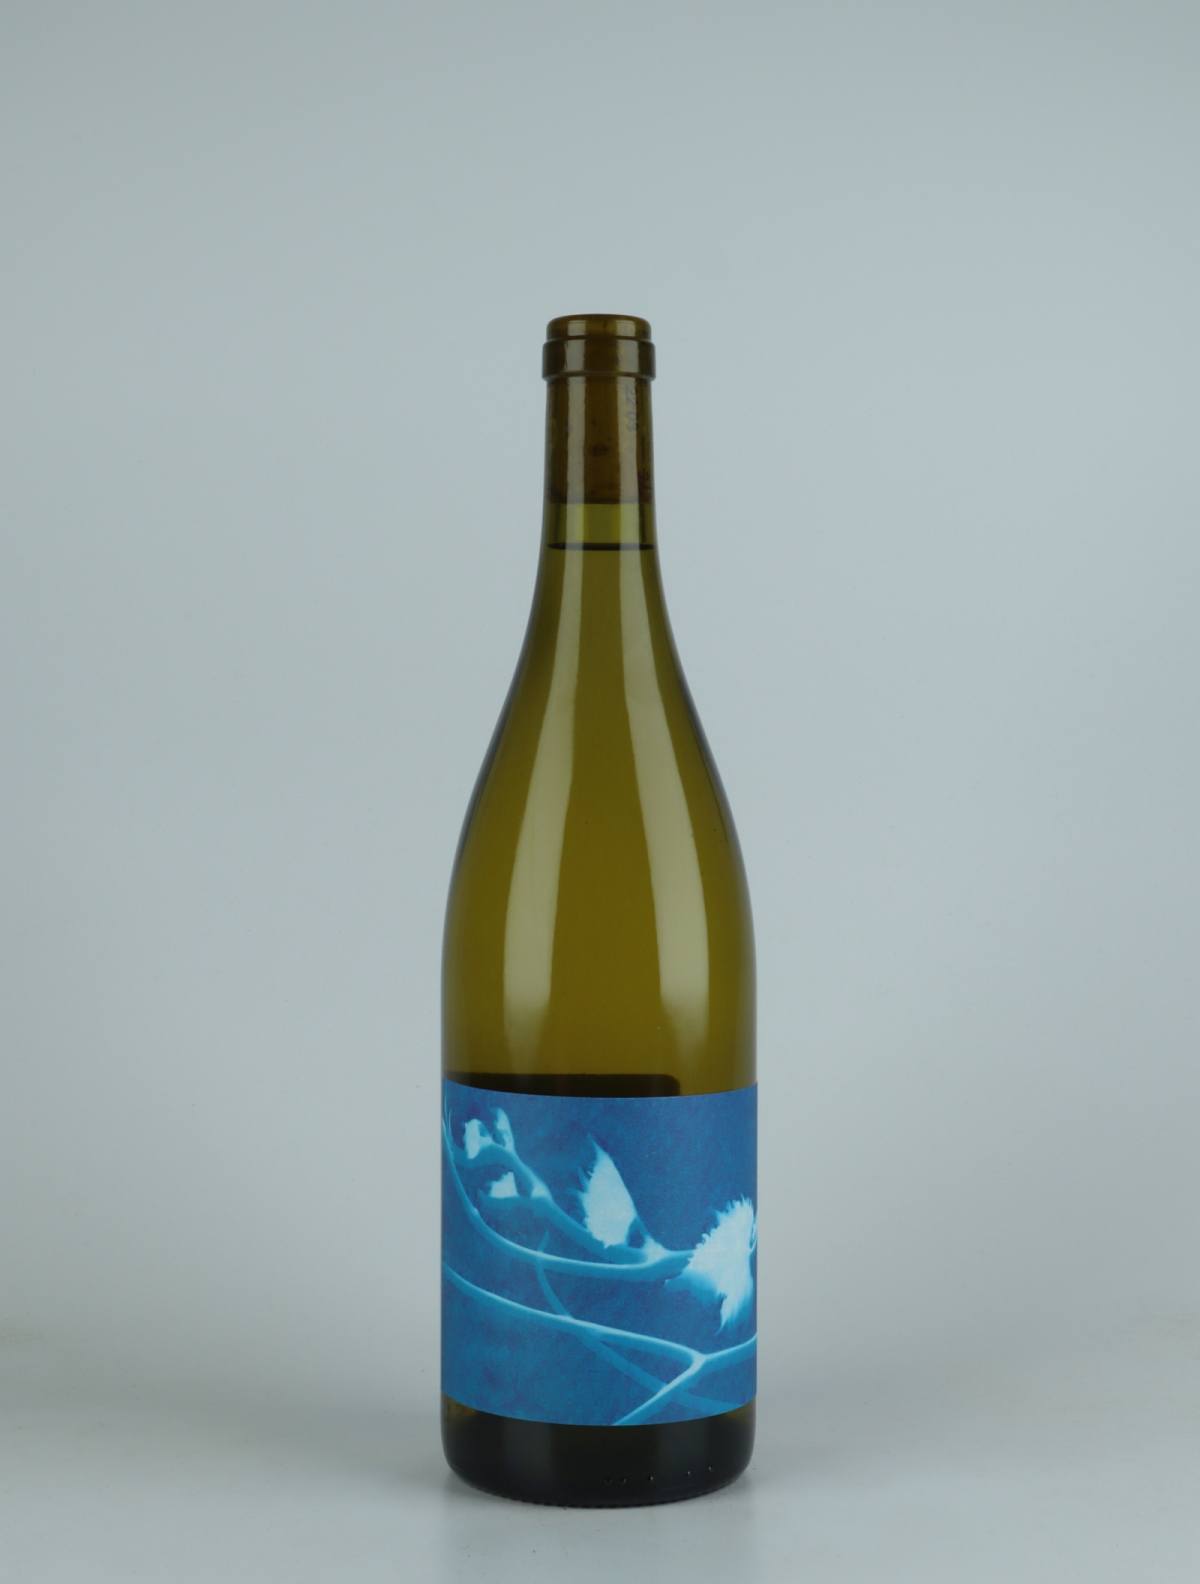 A bottle 2020 Le Rayon Blanc White wine from Thomas Puéchavy, Loire in France